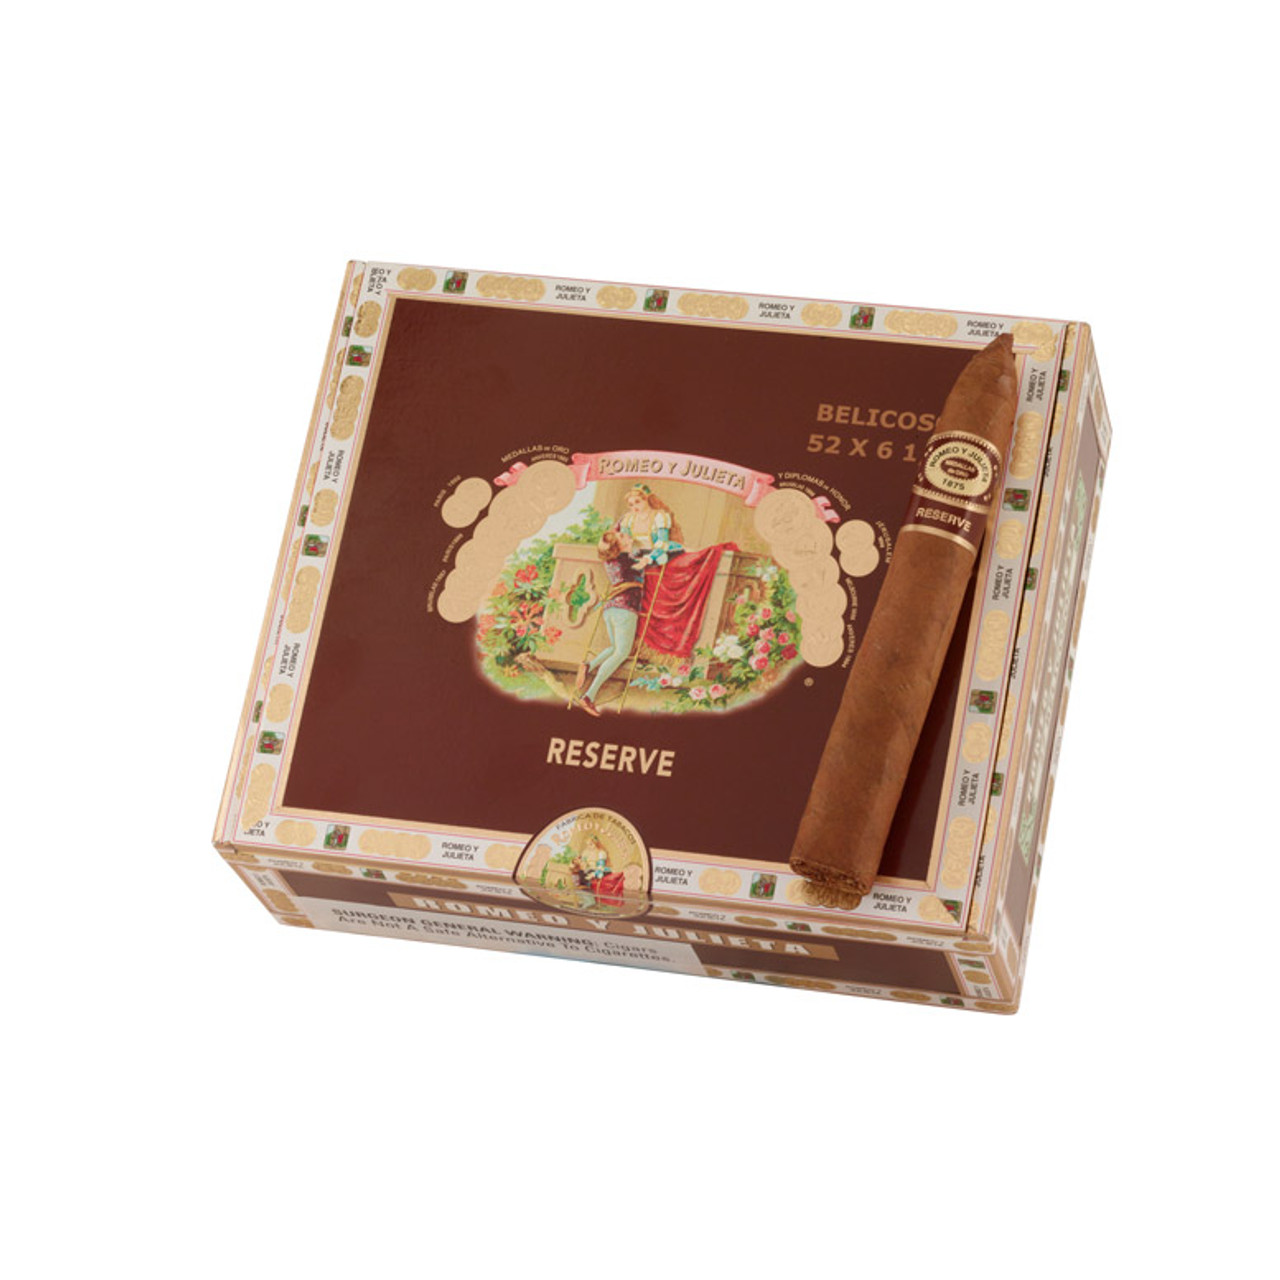 Romeo y Julieta Reserve Belicoso Cigars - 6.12 x 52 (Box of 27) *Box